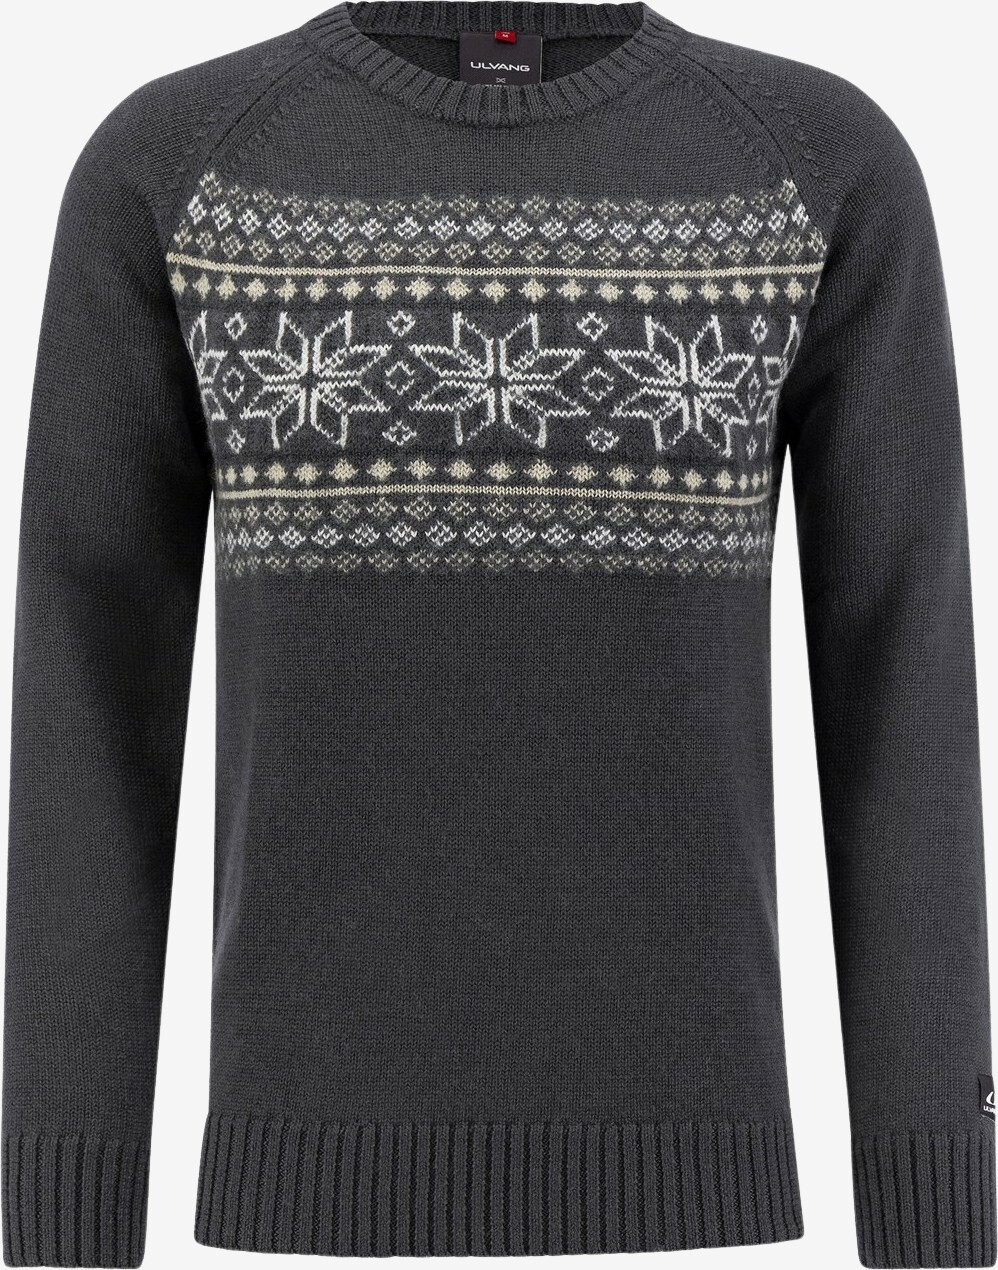 Se Ulvang - Eio Sweater (Grå) - XL hos Friluft.dk